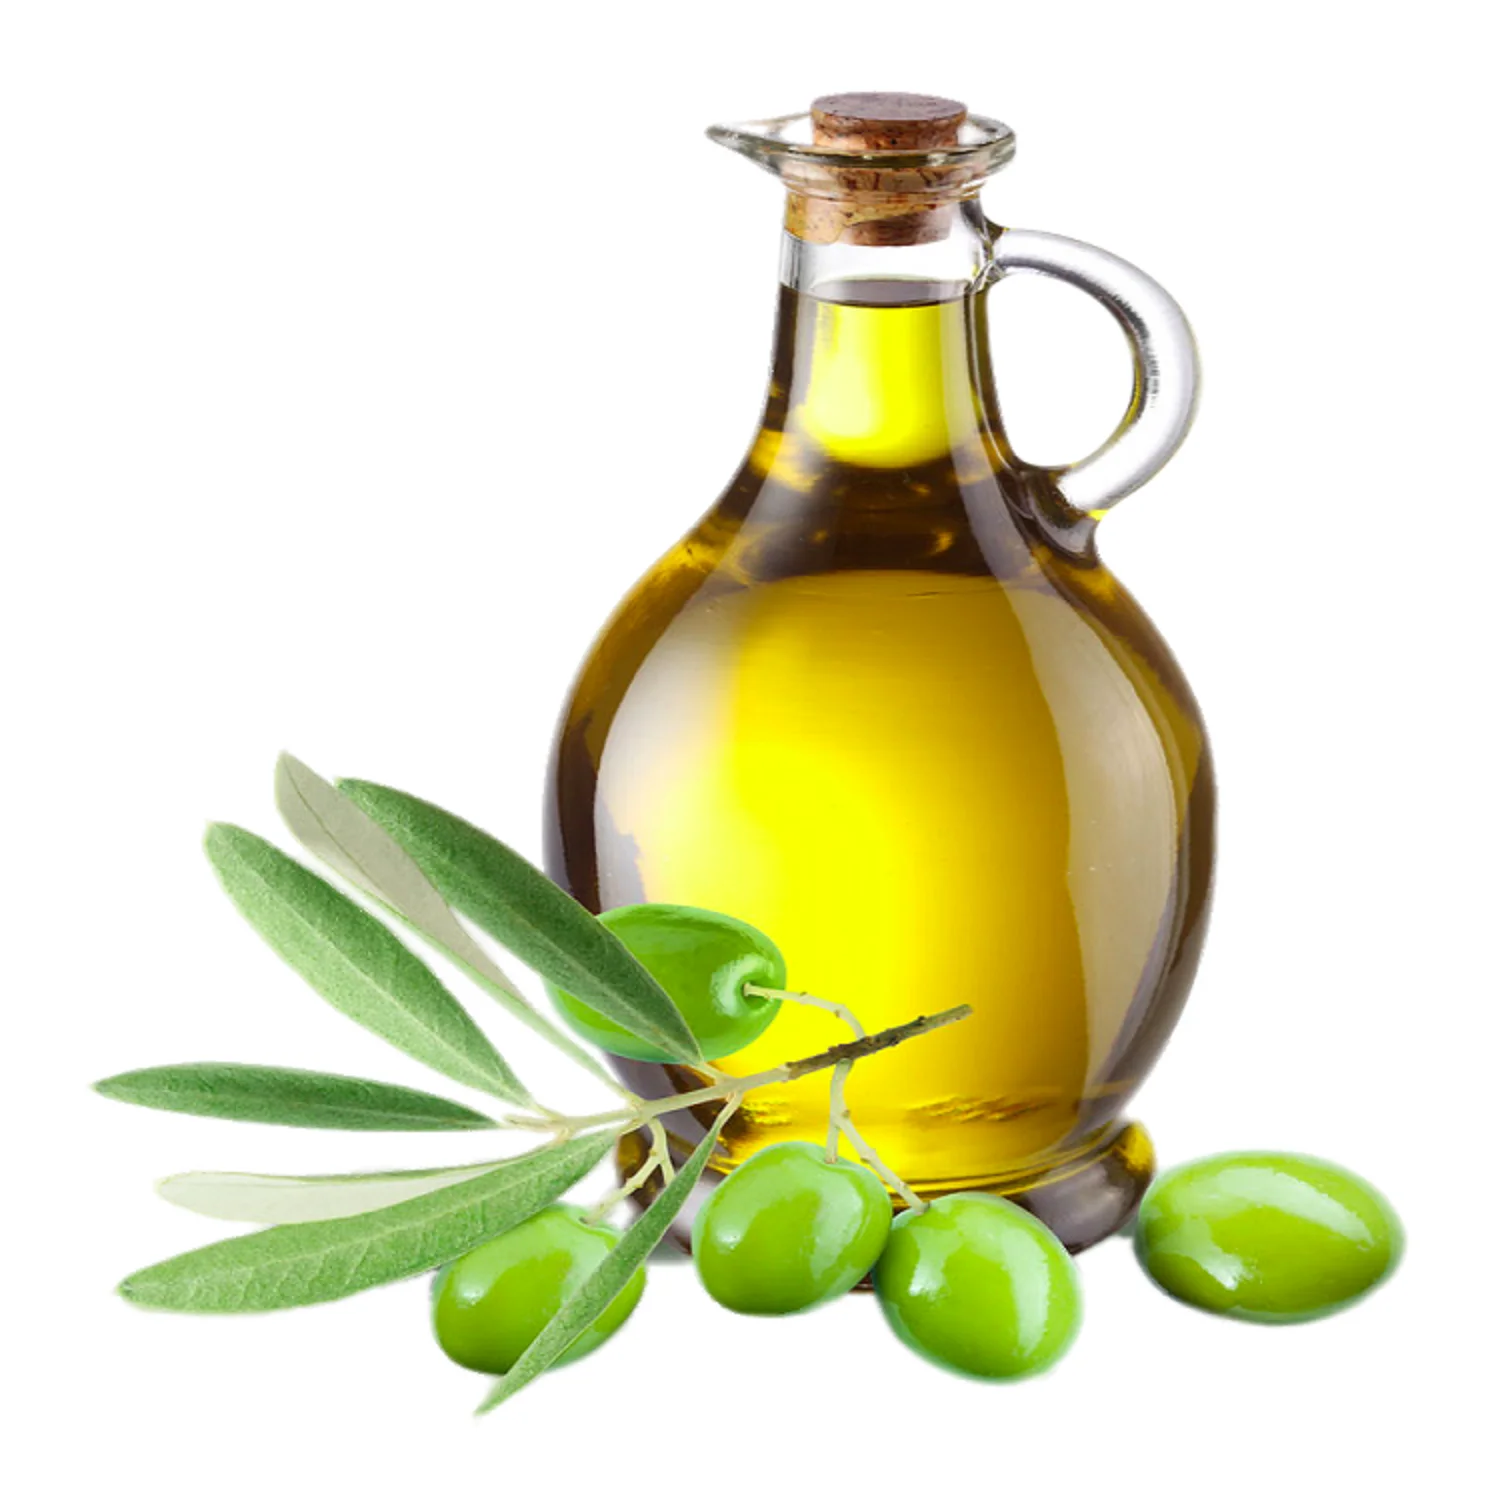 Olive Oil масло оливковое. Олив Ойл масло оливковое. Масло оливковое natural Olive Oil. Масло оливы, жожоба оливы. Почему горчит оливковое масло